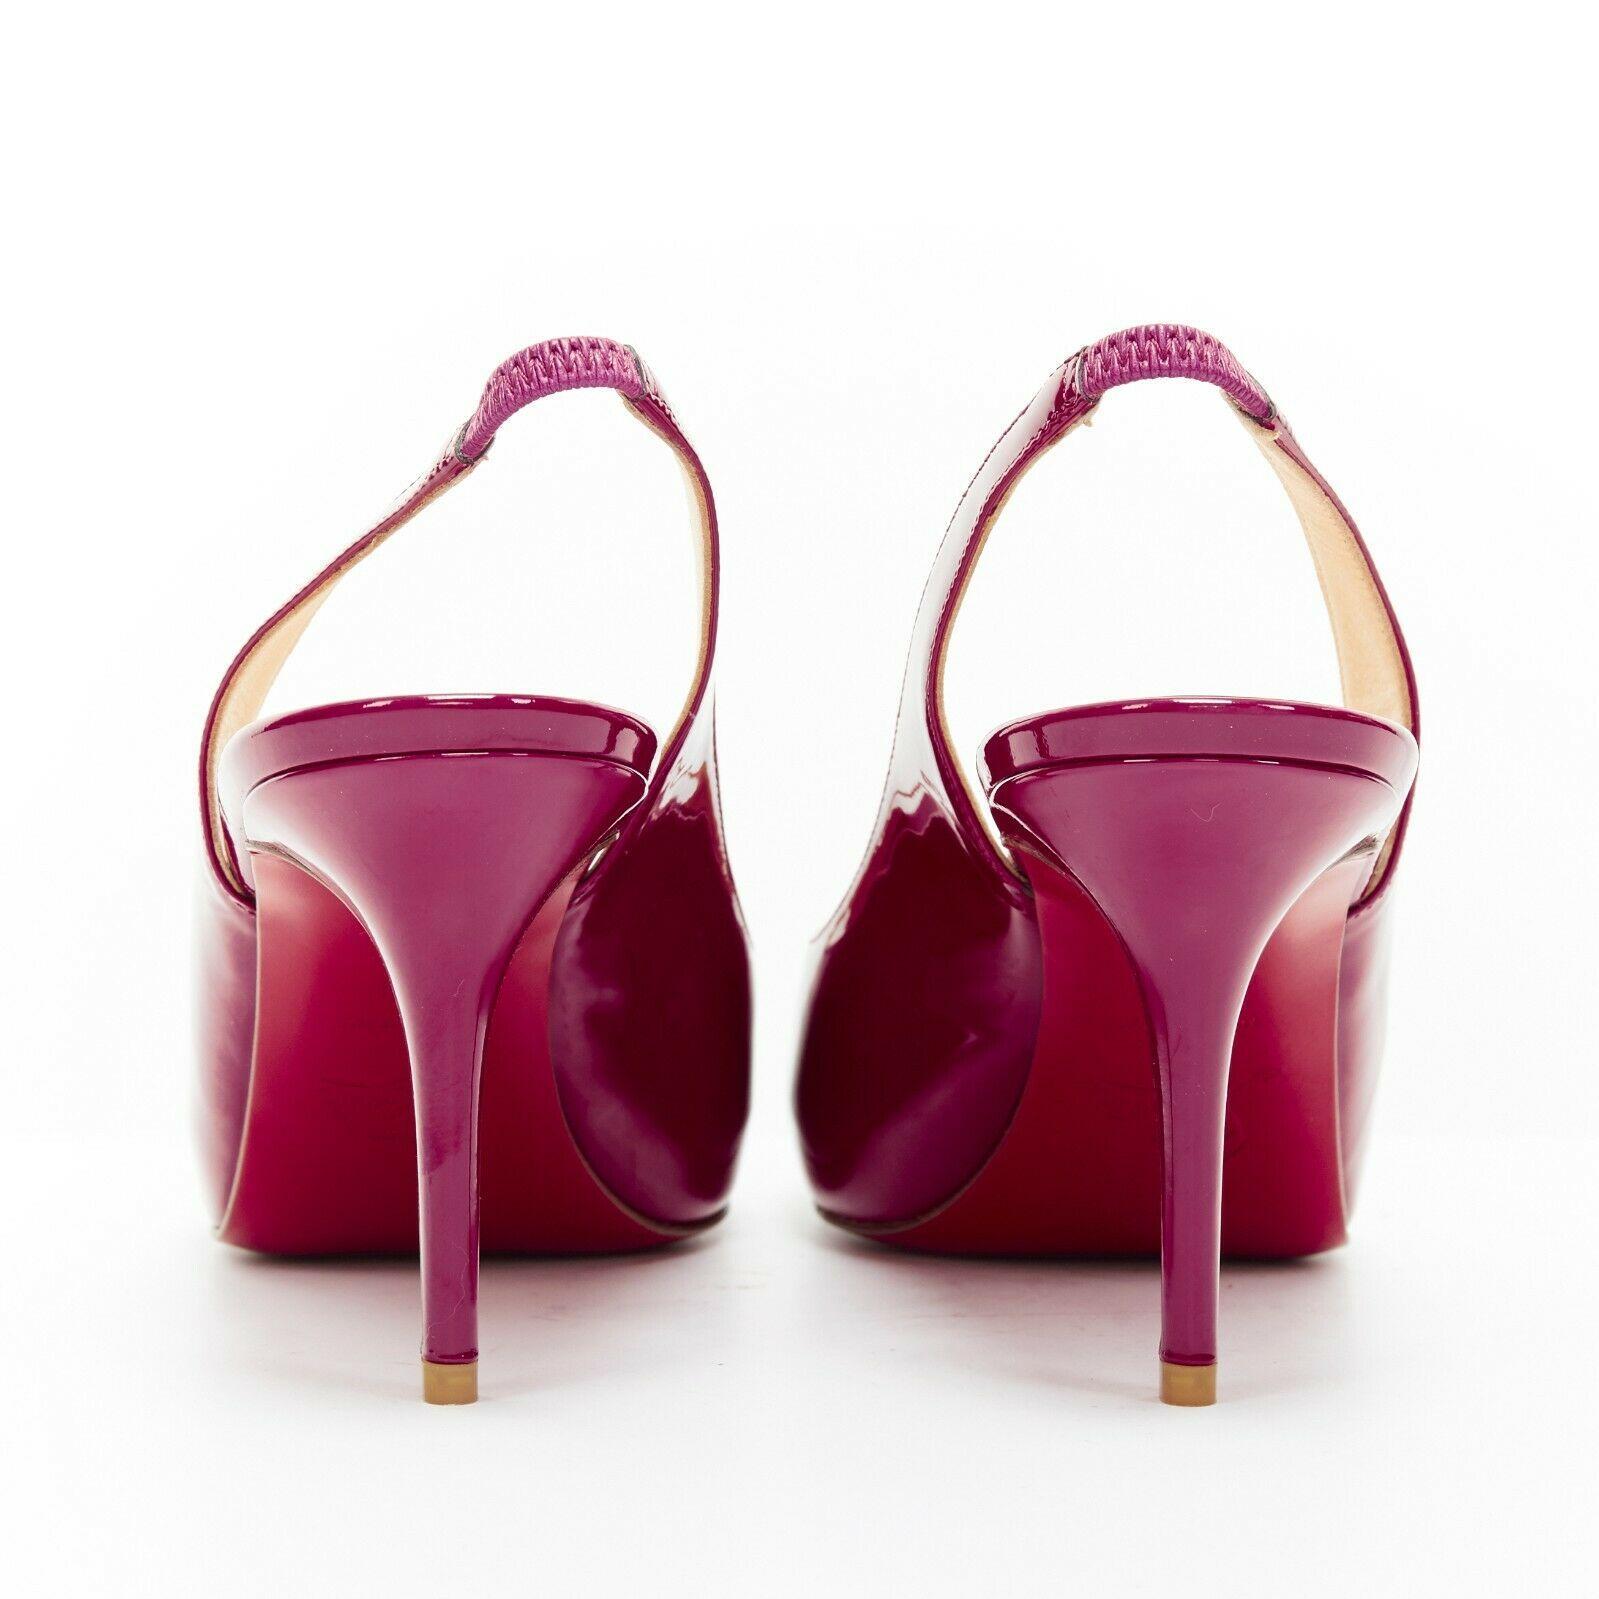 Women's new CHRISTIAN LOUBOUTIN Mater Claude Sling 85 raspberry pink patent heels EU38.5